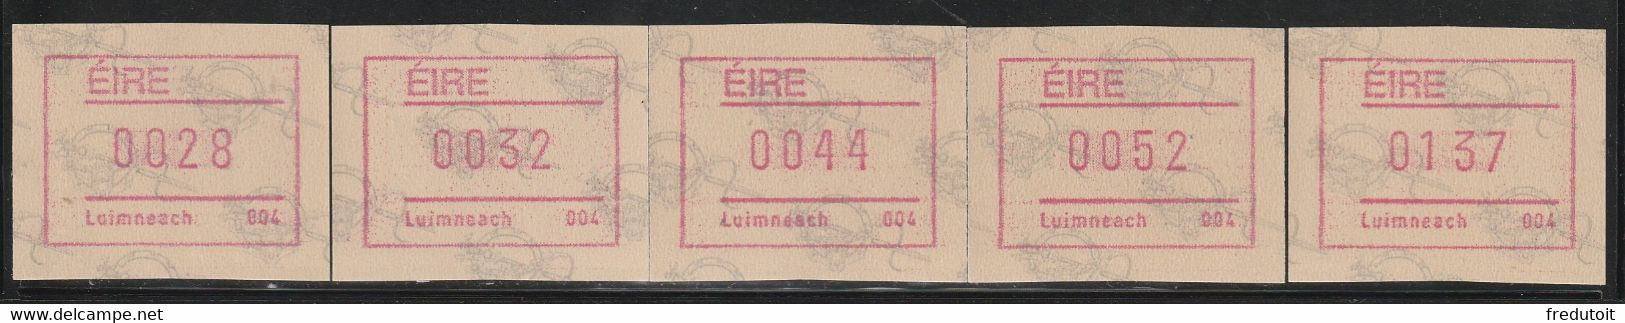 IRLANDE - Timbres Distributeurs / FRAMA  ATM - N°4** (1992) Luimneach 004 - Viñetas De Franqueo (Frama)